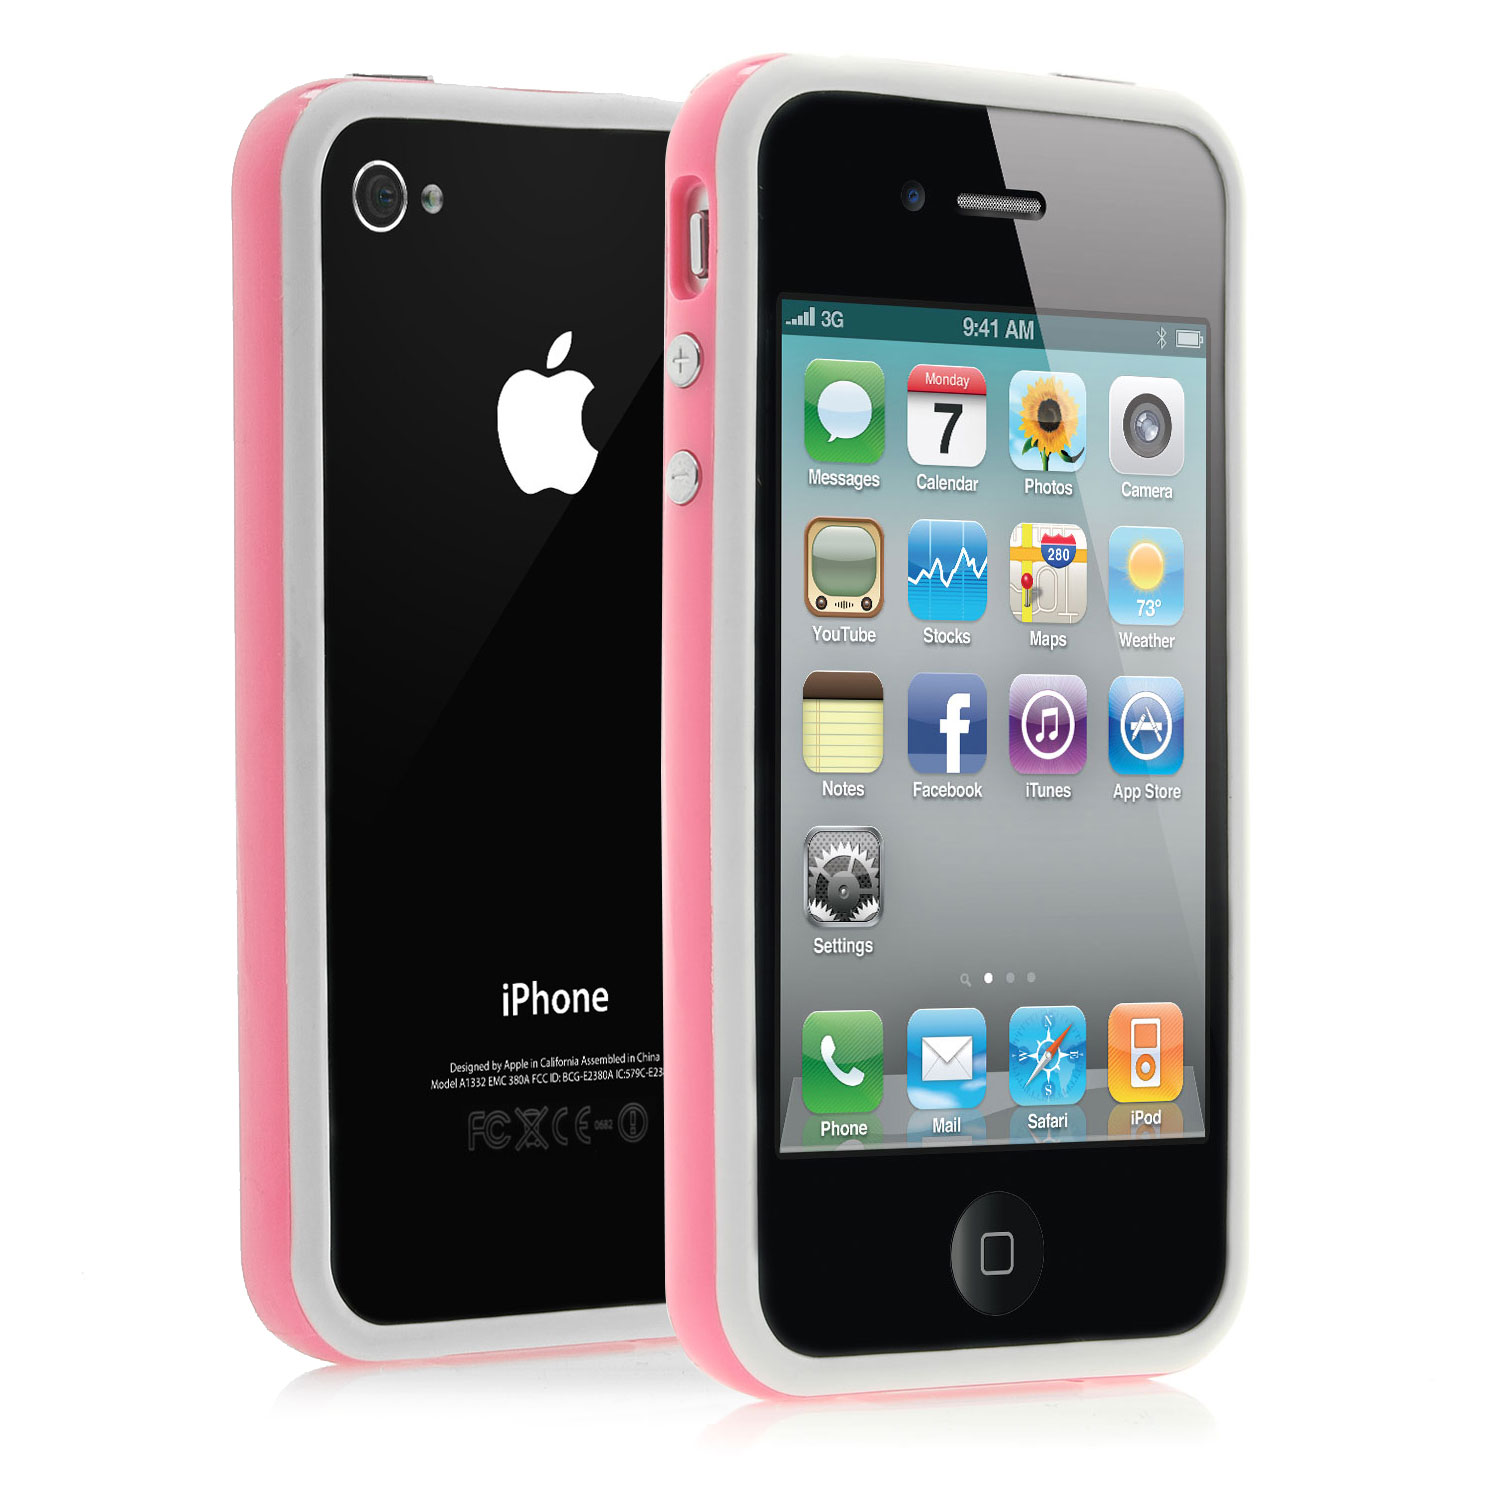 iPhone 4 dünn TPU Silikon Schutzhülle - weiß pink 